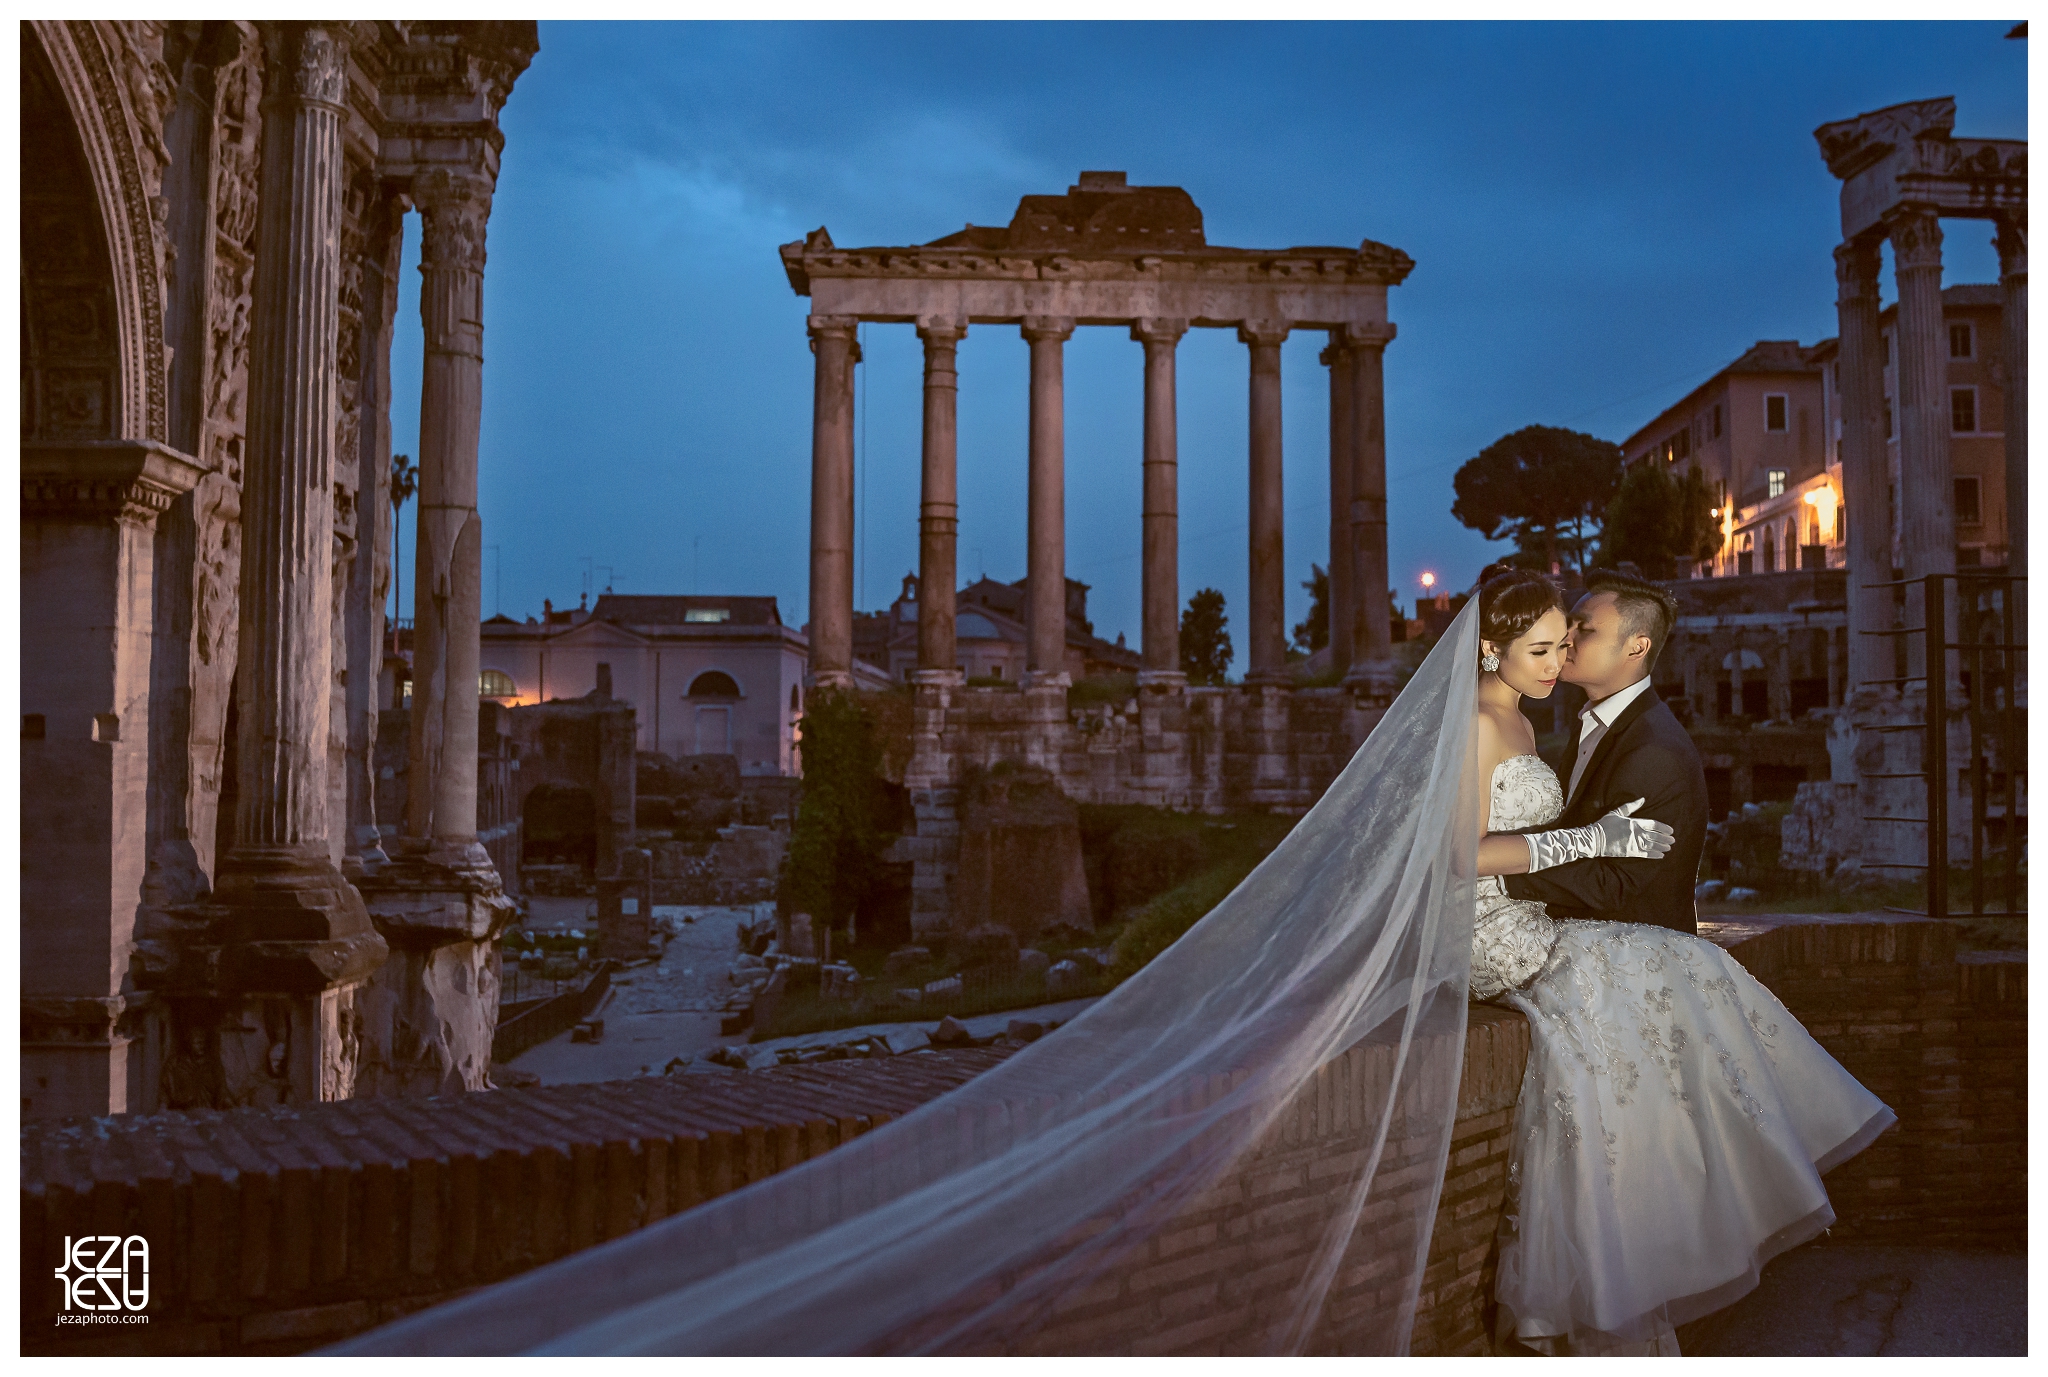 Italy Rome colosseum Engagement Prewedding photo session